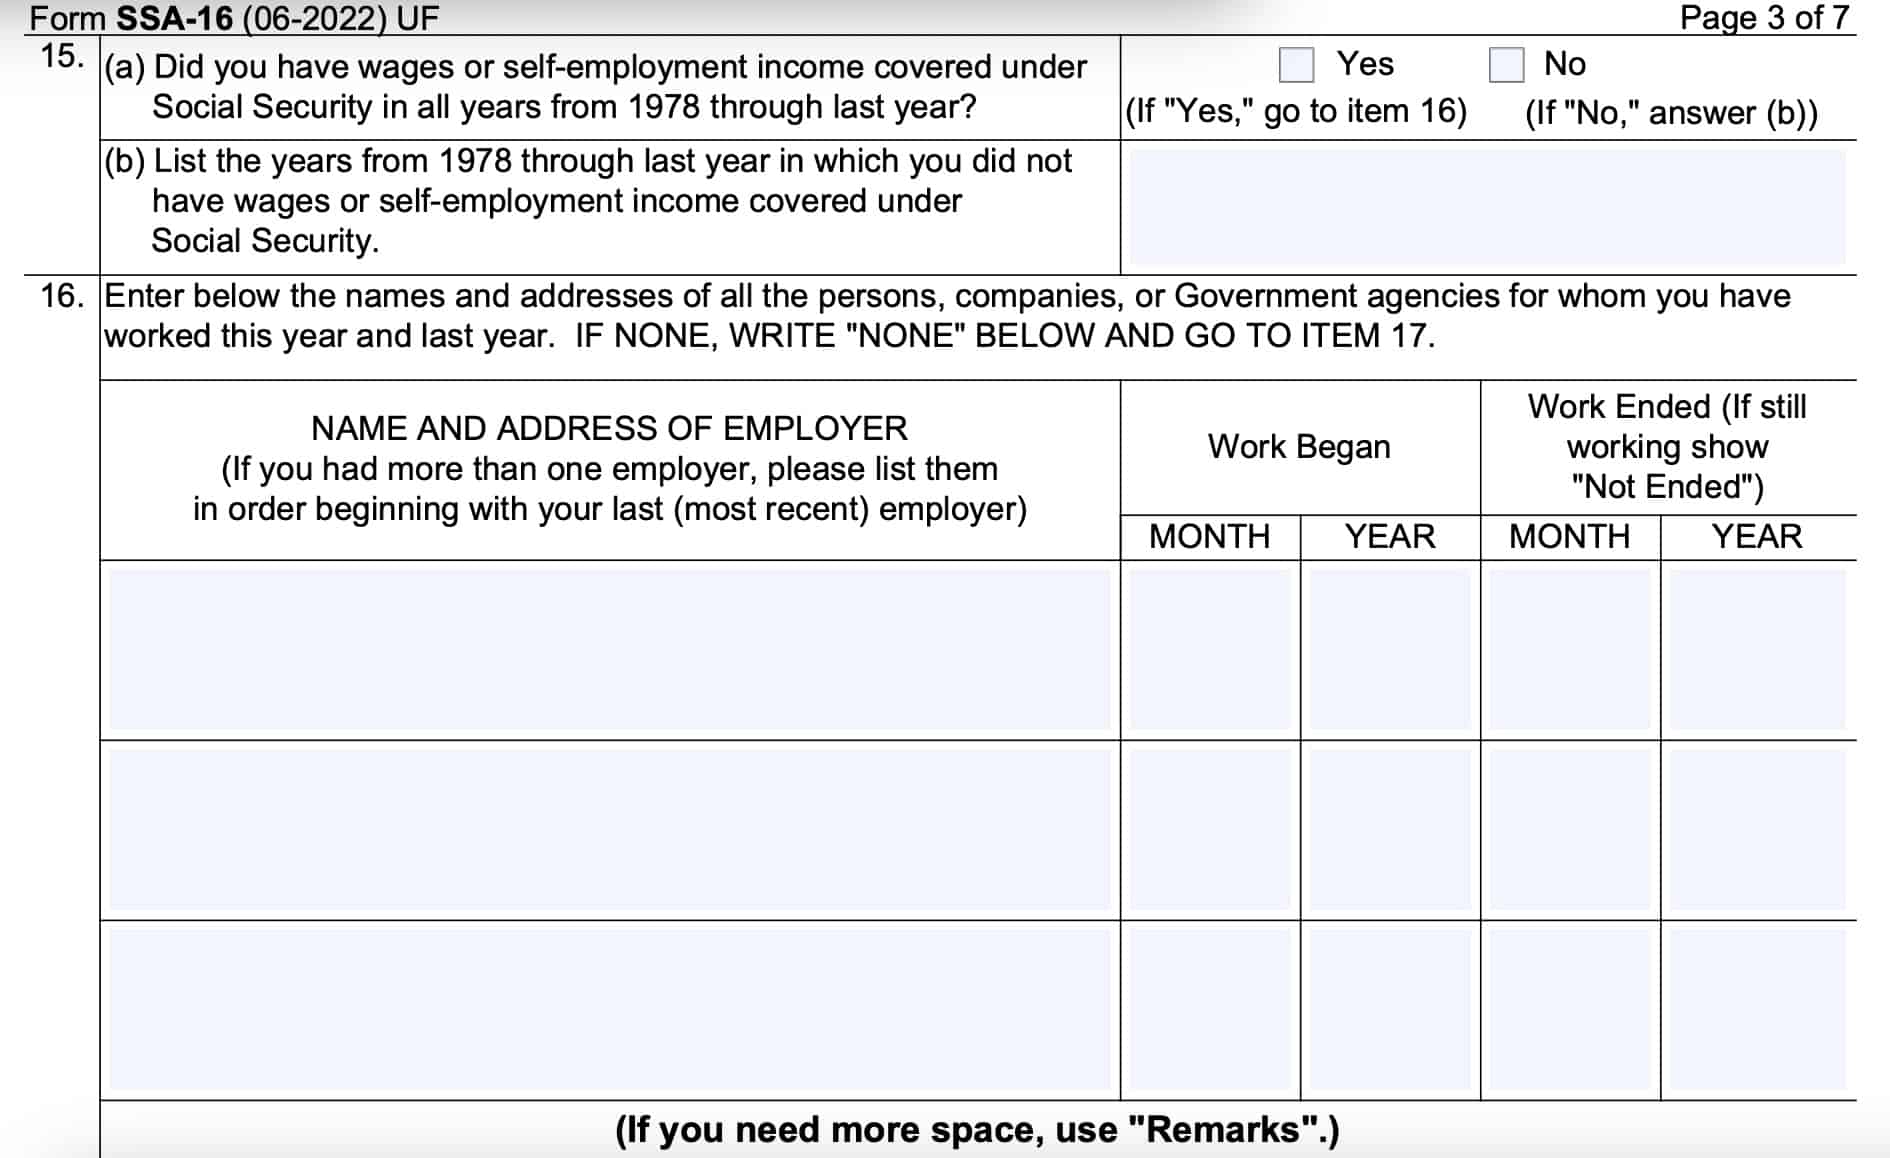 Form ssa-16 employment history